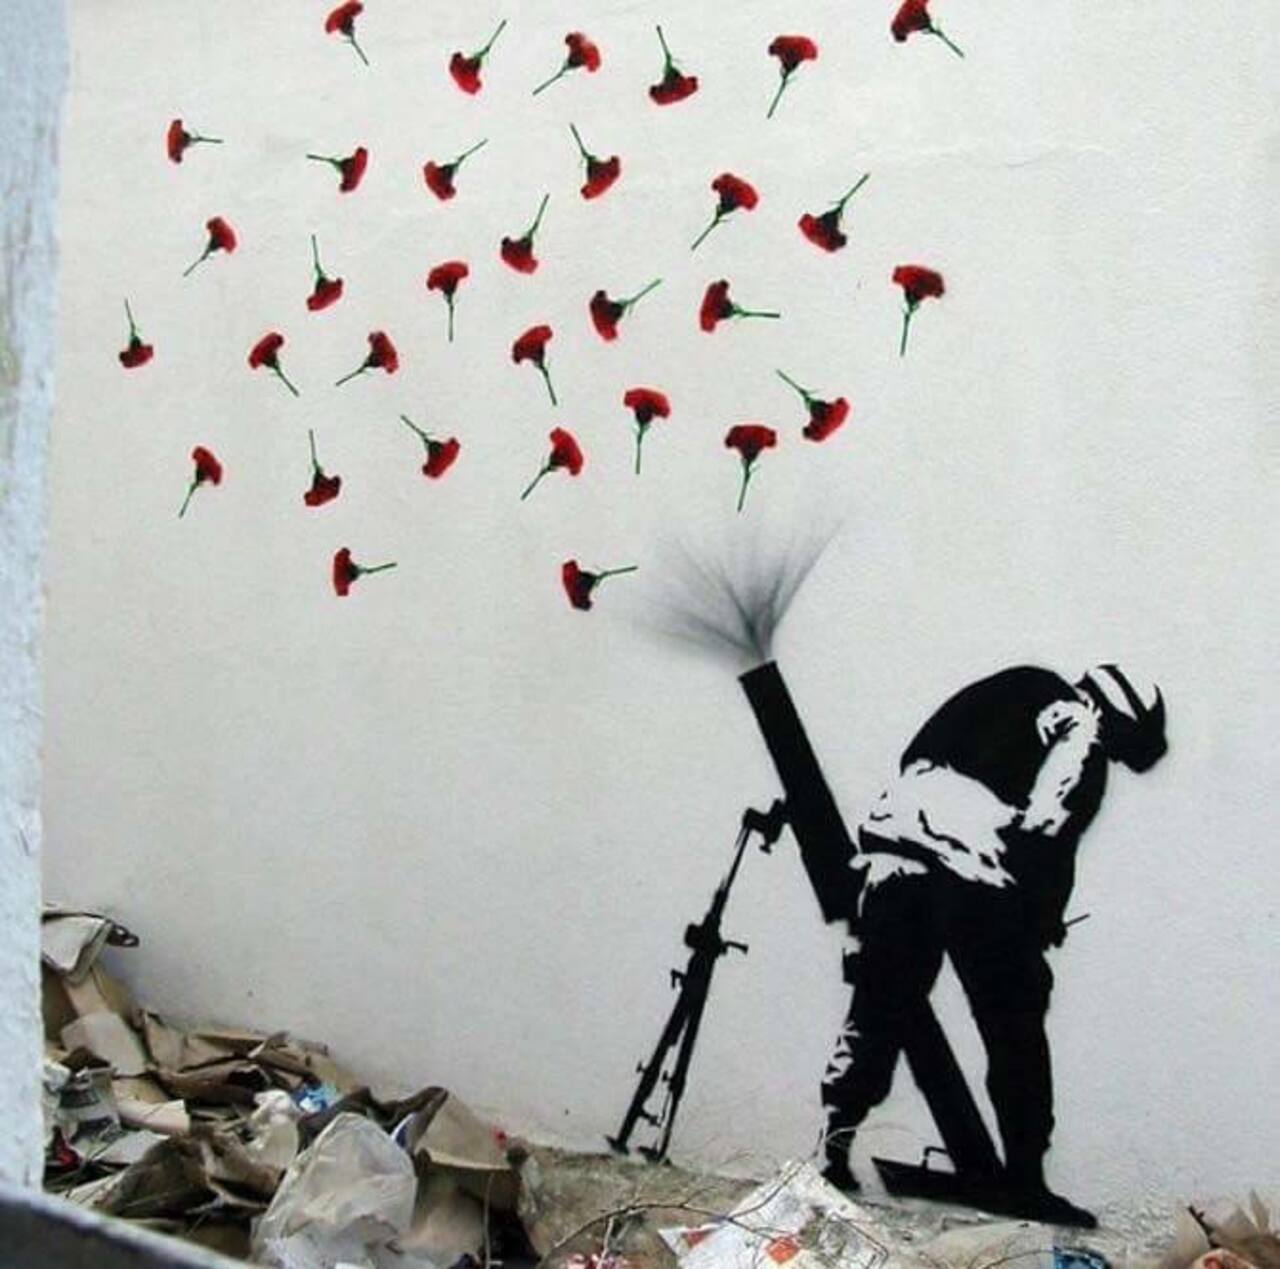 FLOWER BOMBS – #Creative #Streetart | Be ▲rtist - Be ▲rt https://beartistbeart.com/2016/08/17/flower-bombs-creative-streetart/?utm_campaign=crowdfire&utm_content=crowdfire&utm_medium=social&utm_source=twitter https://t.co/gxXXM7cG2e